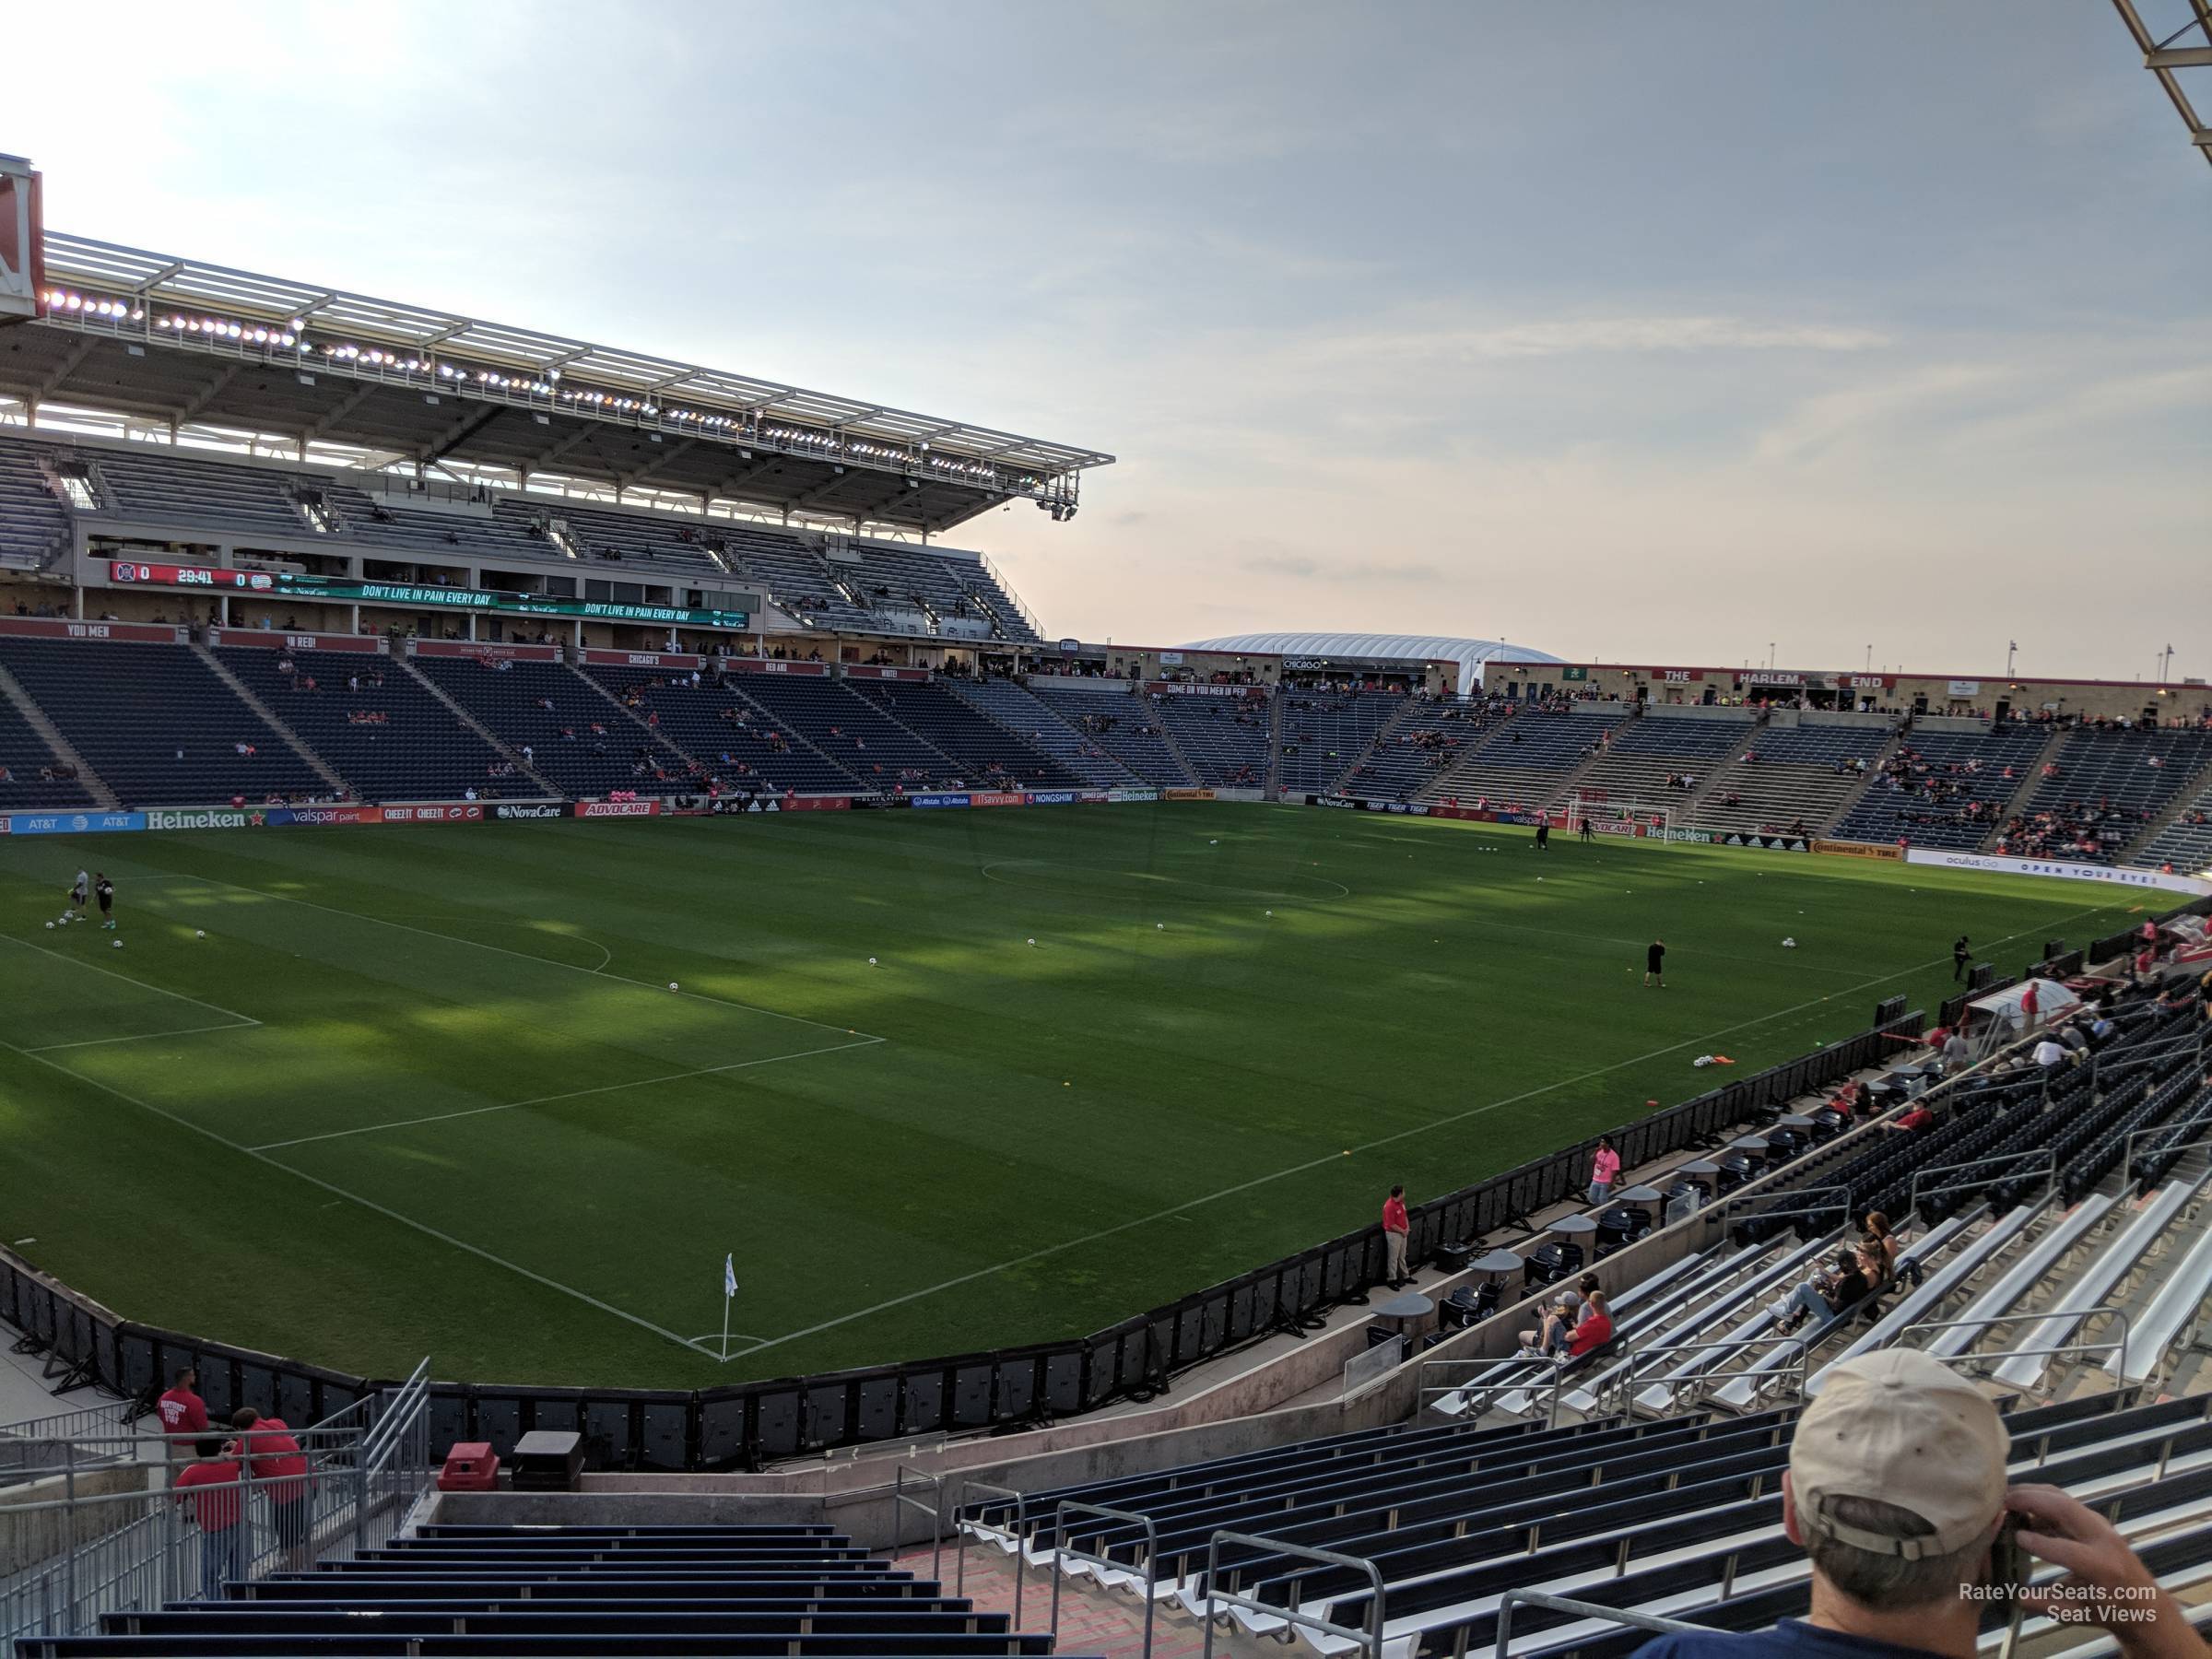 section 134, row 22 seat view  - seatgeek stadium